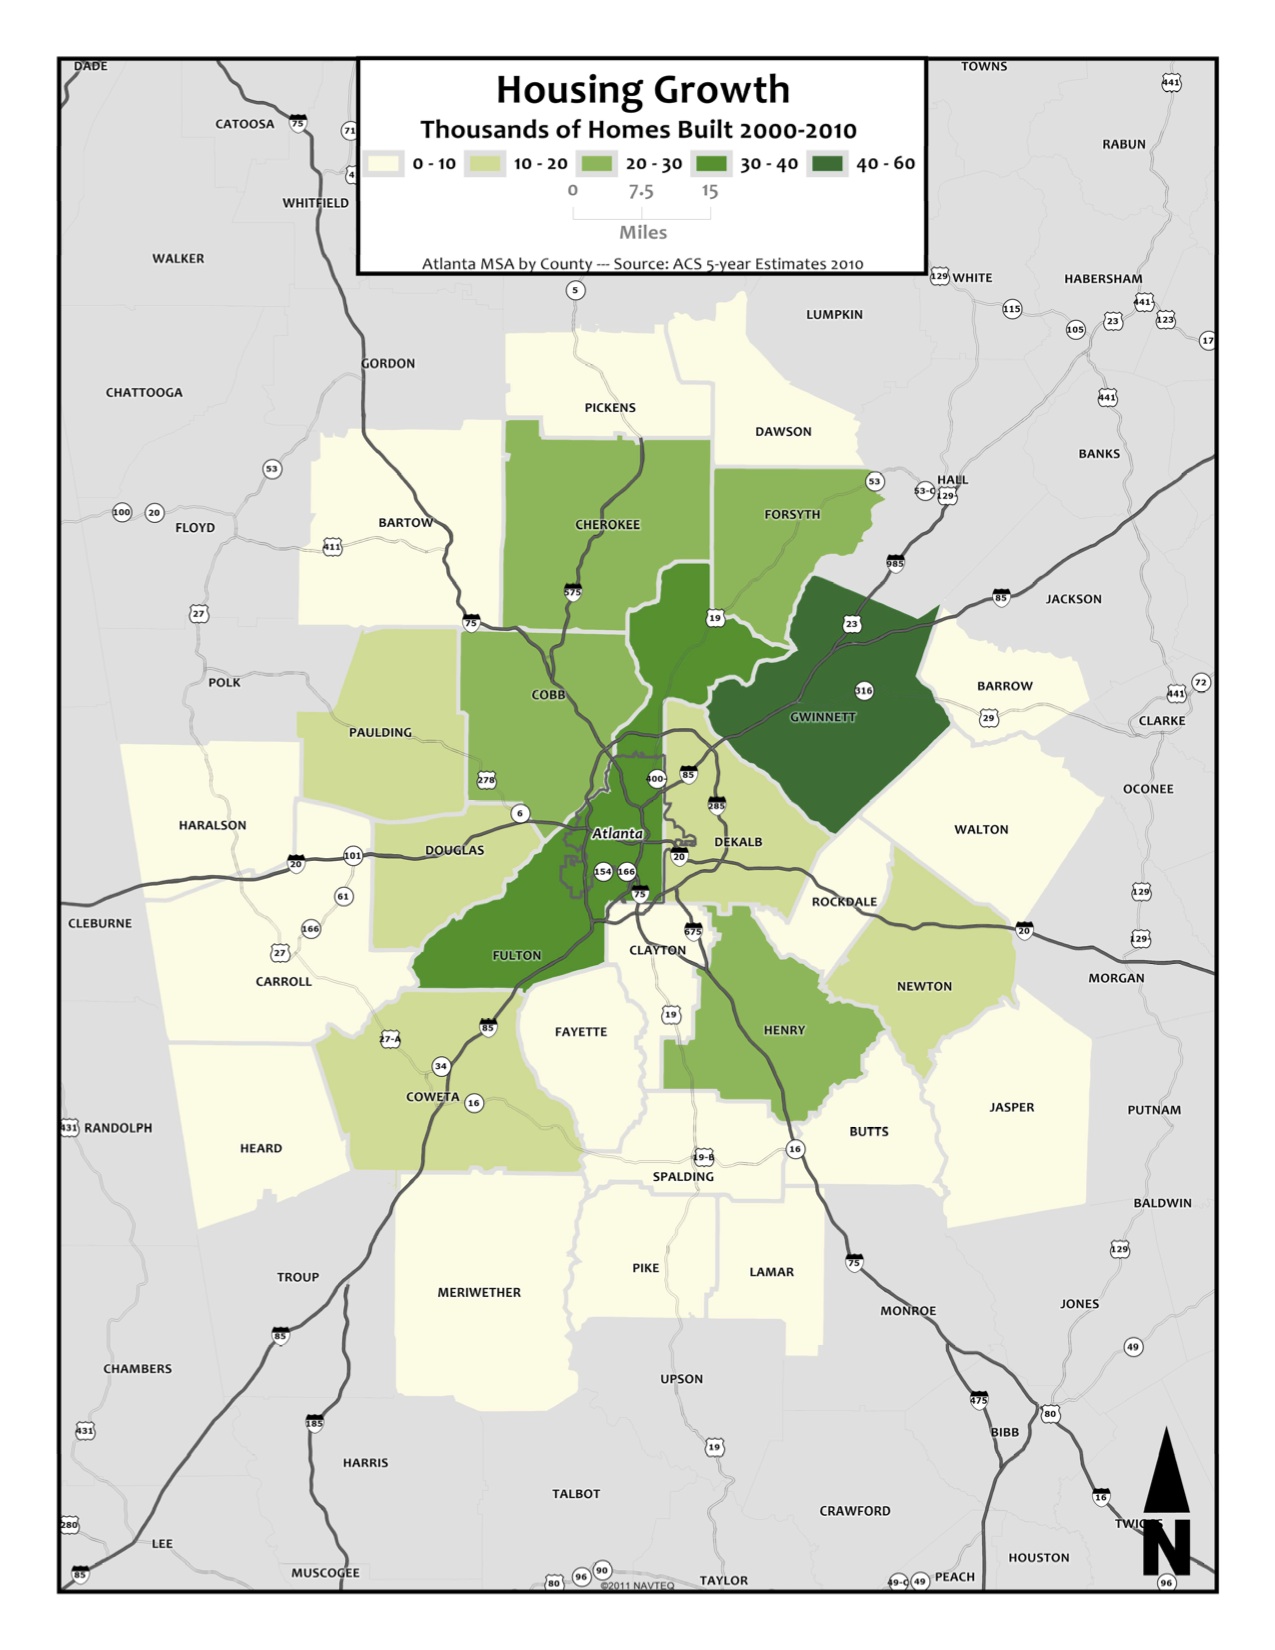 Housing Unit Count, 2000-2010 – metro counties